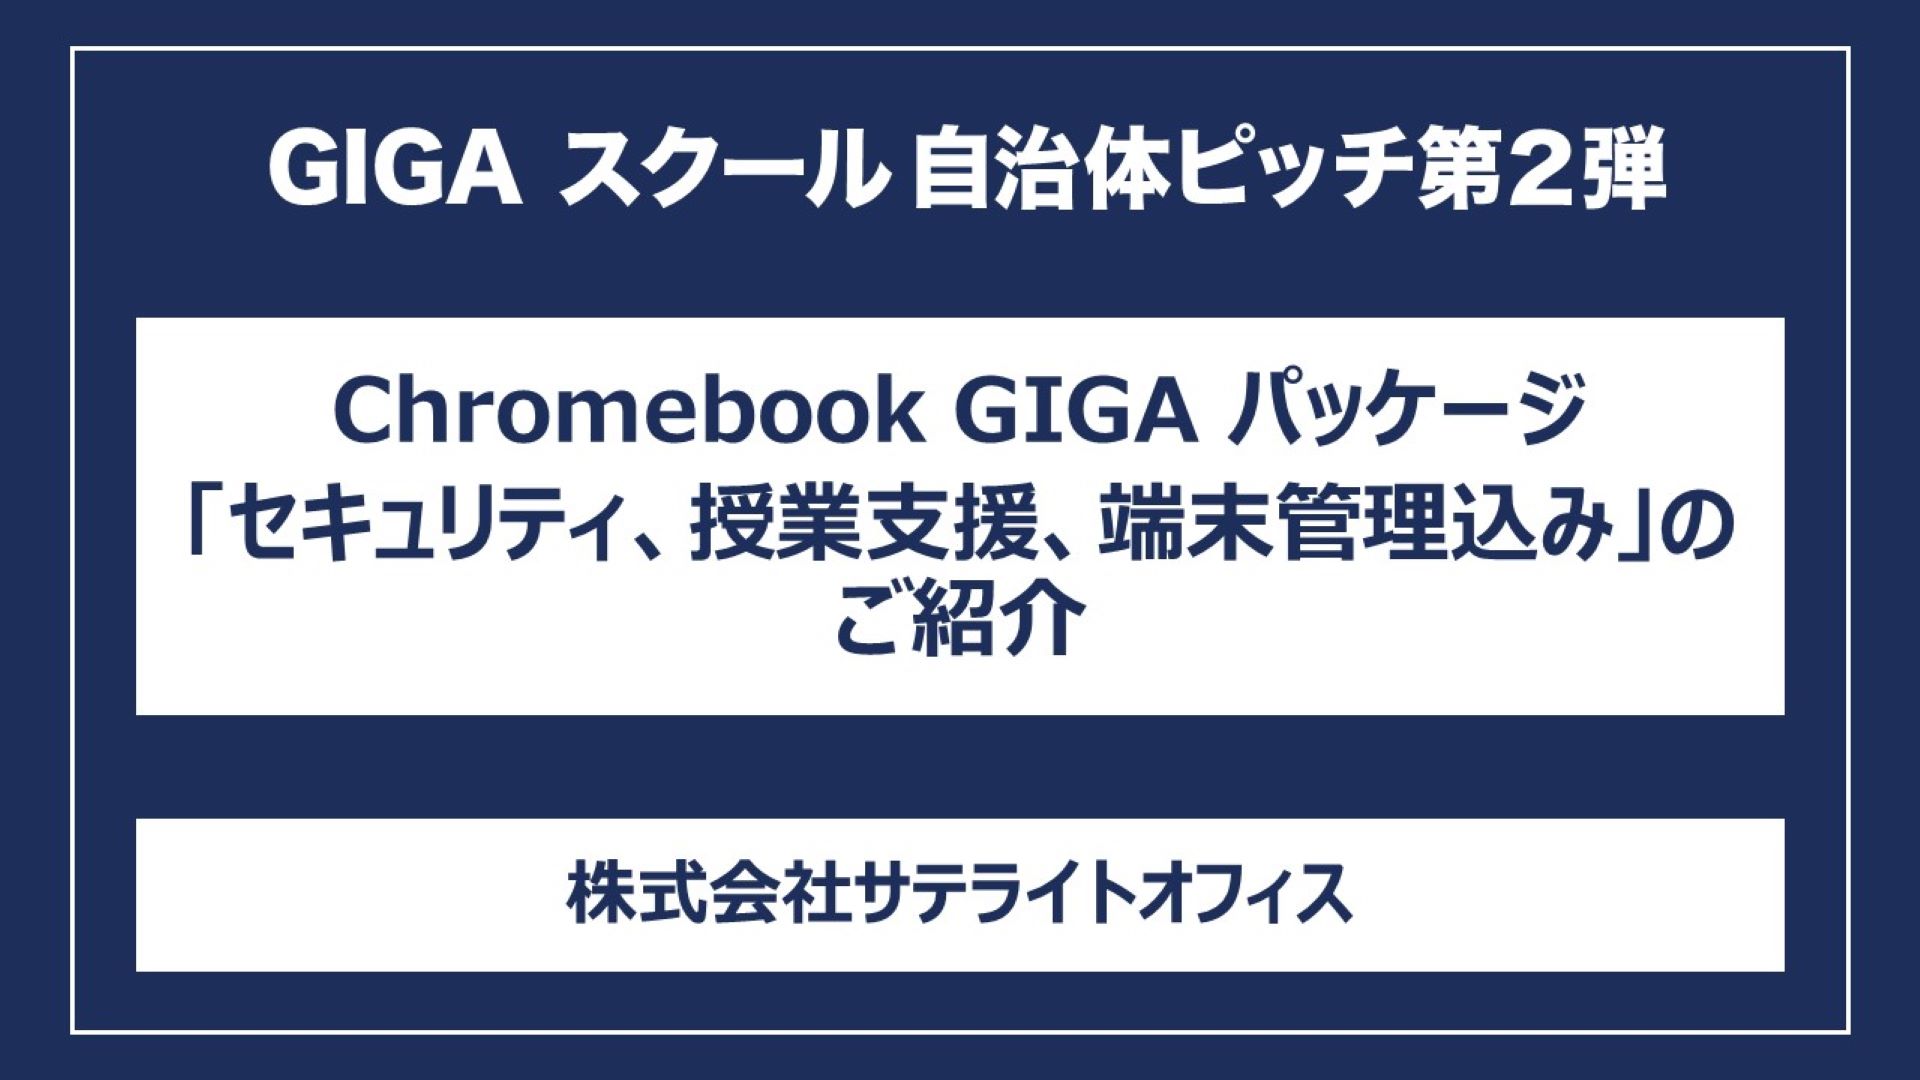 Chromebook GIGA パッケージ「セキュリティ、授業支援、端末管理込み」のご紹介